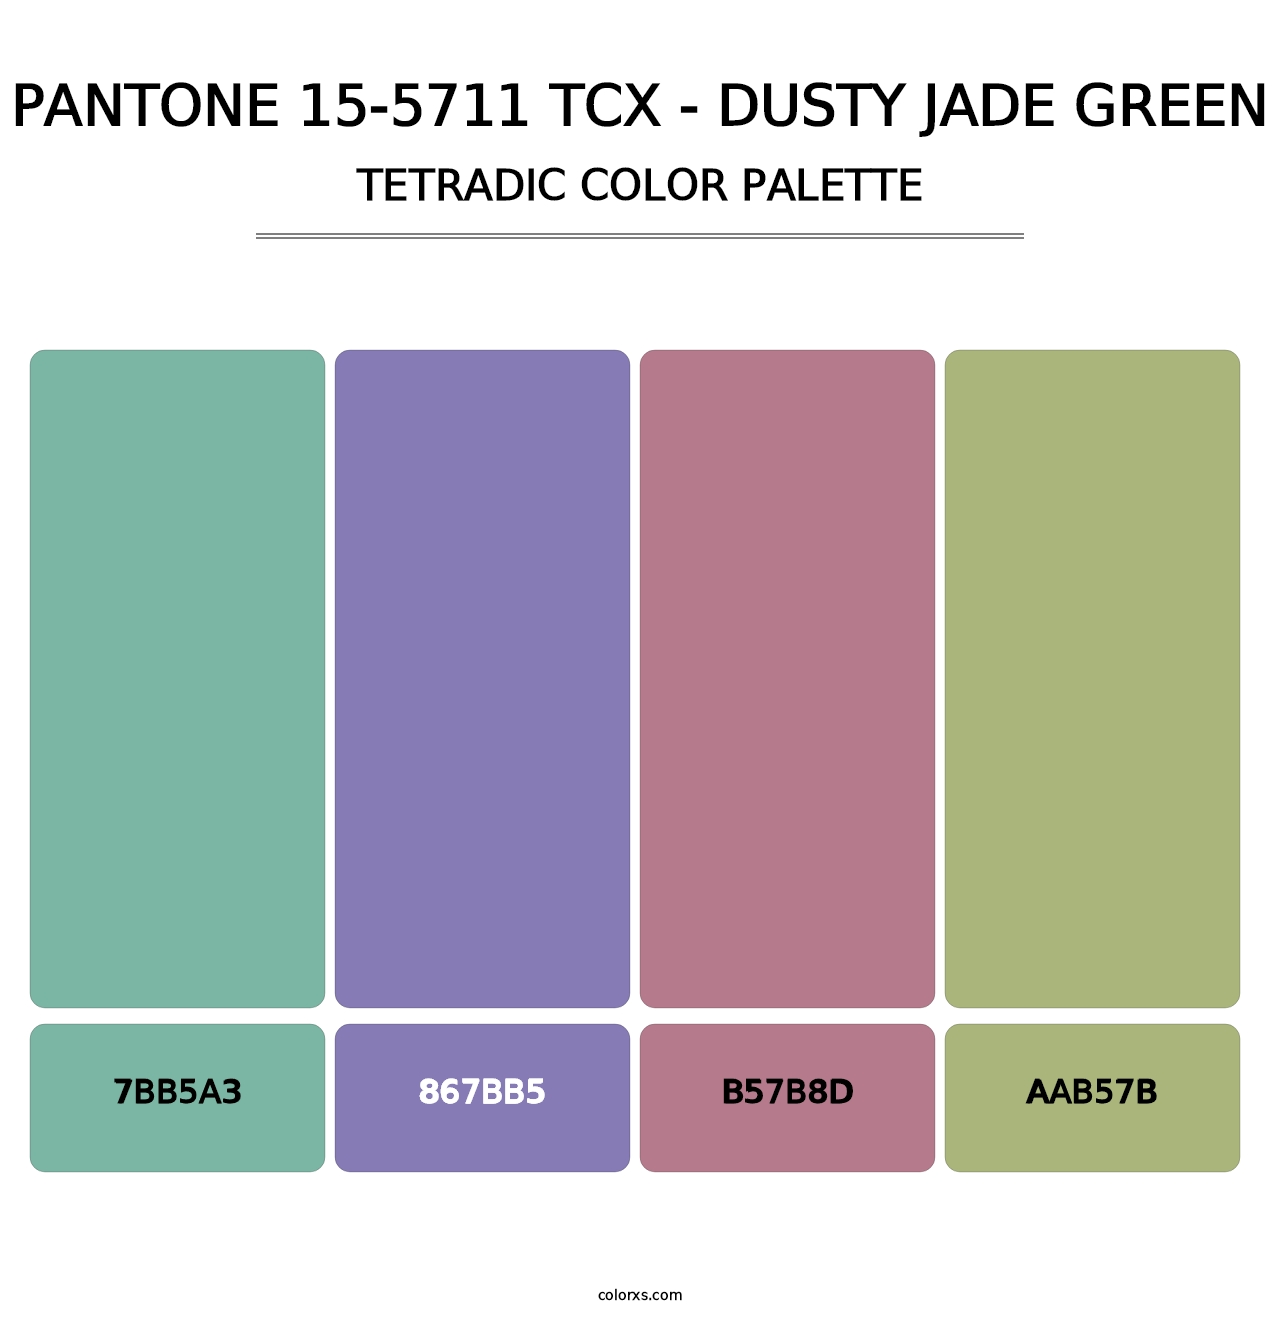 PANTONE 15-5711 TCX - Dusty Jade Green - Tetradic Color Palette